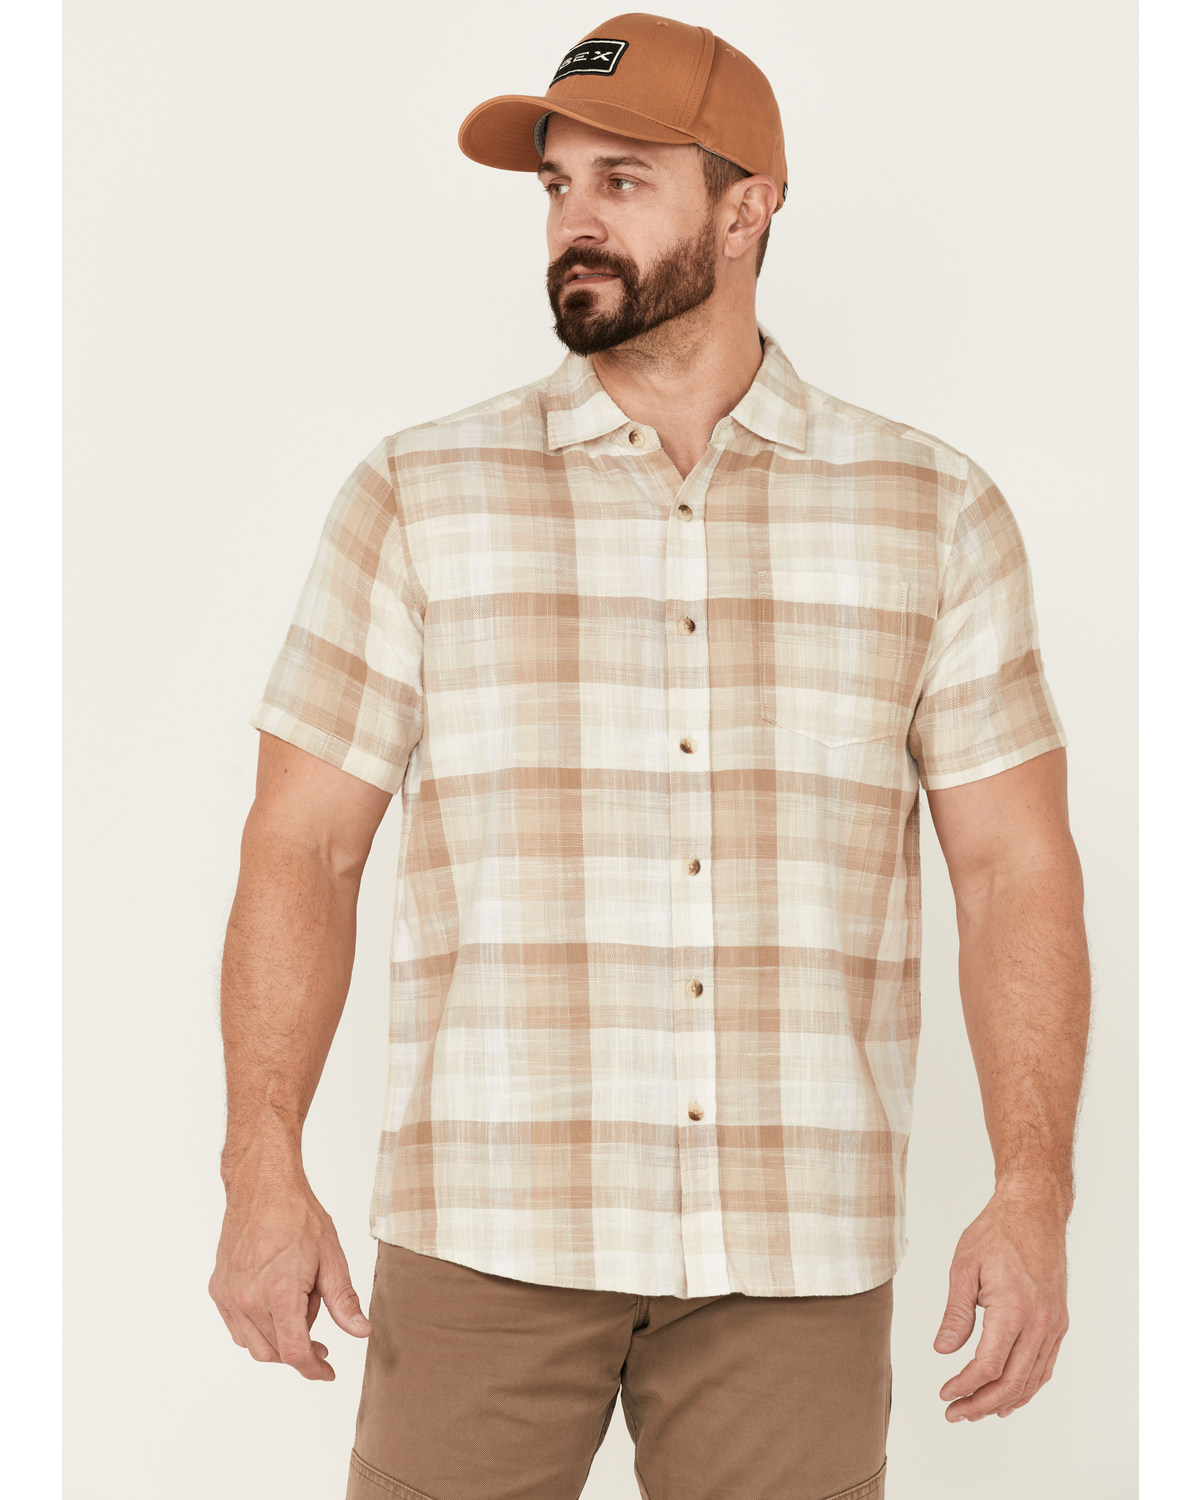 North River Men's Crosshatch Large Plaid Short Sleeve Button Down Western Shirt